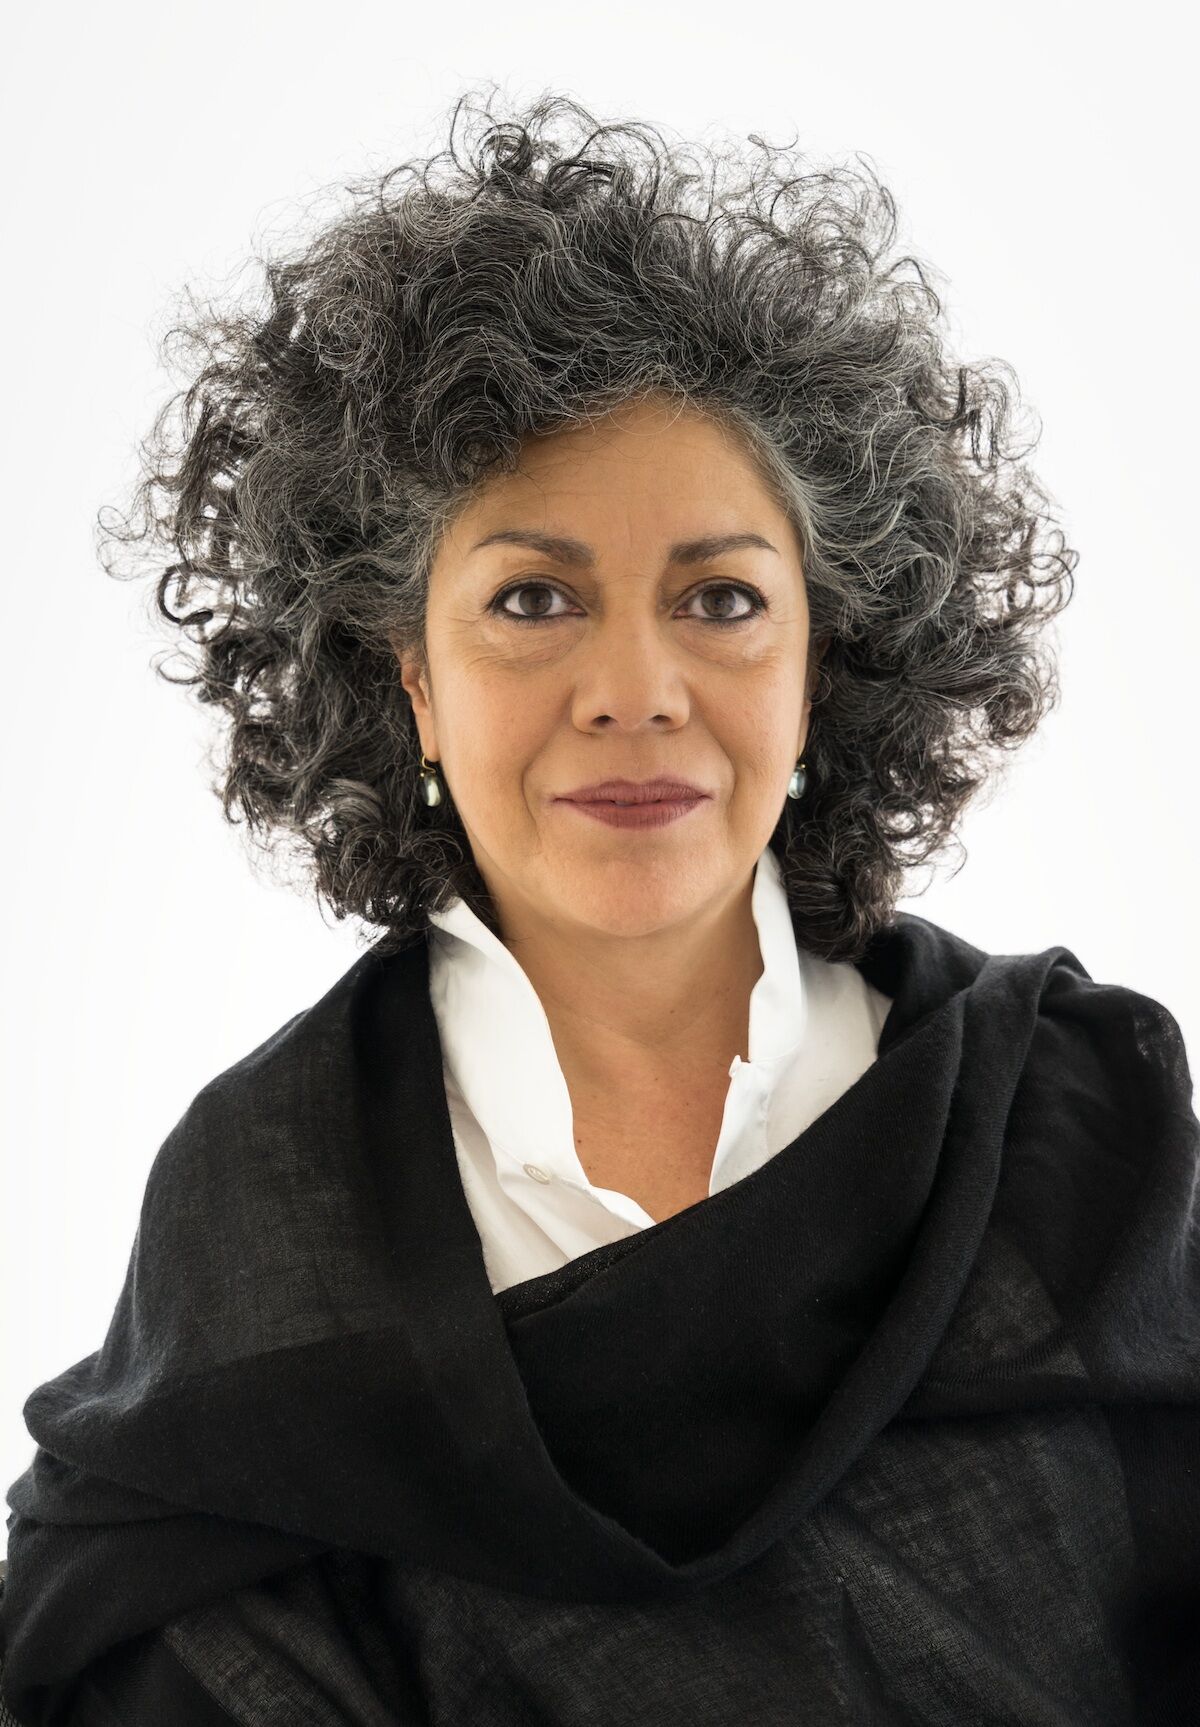 Doris Salcedo. Courtesy Solomon R. Guggenheim Foundation. Photo by David Heald.